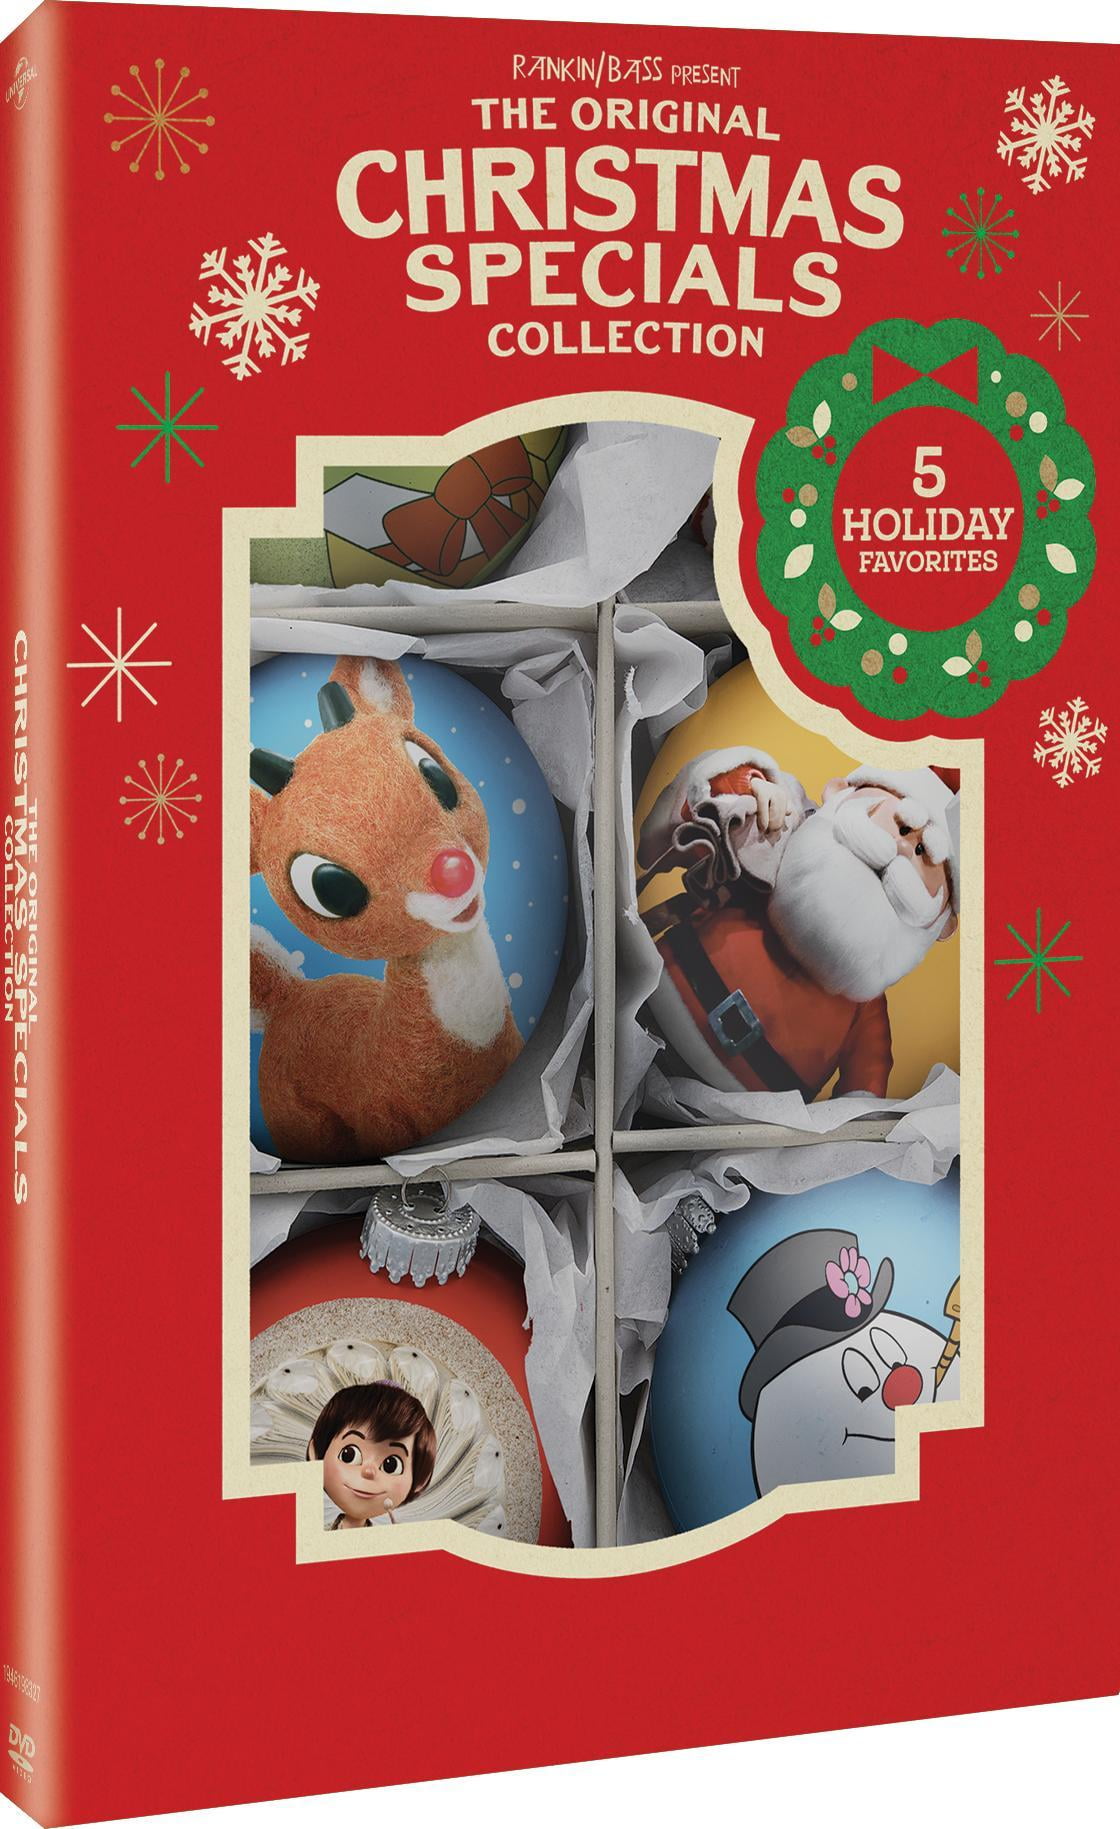 The Original Christmas Specials Collection Deluxe Edition Walmart